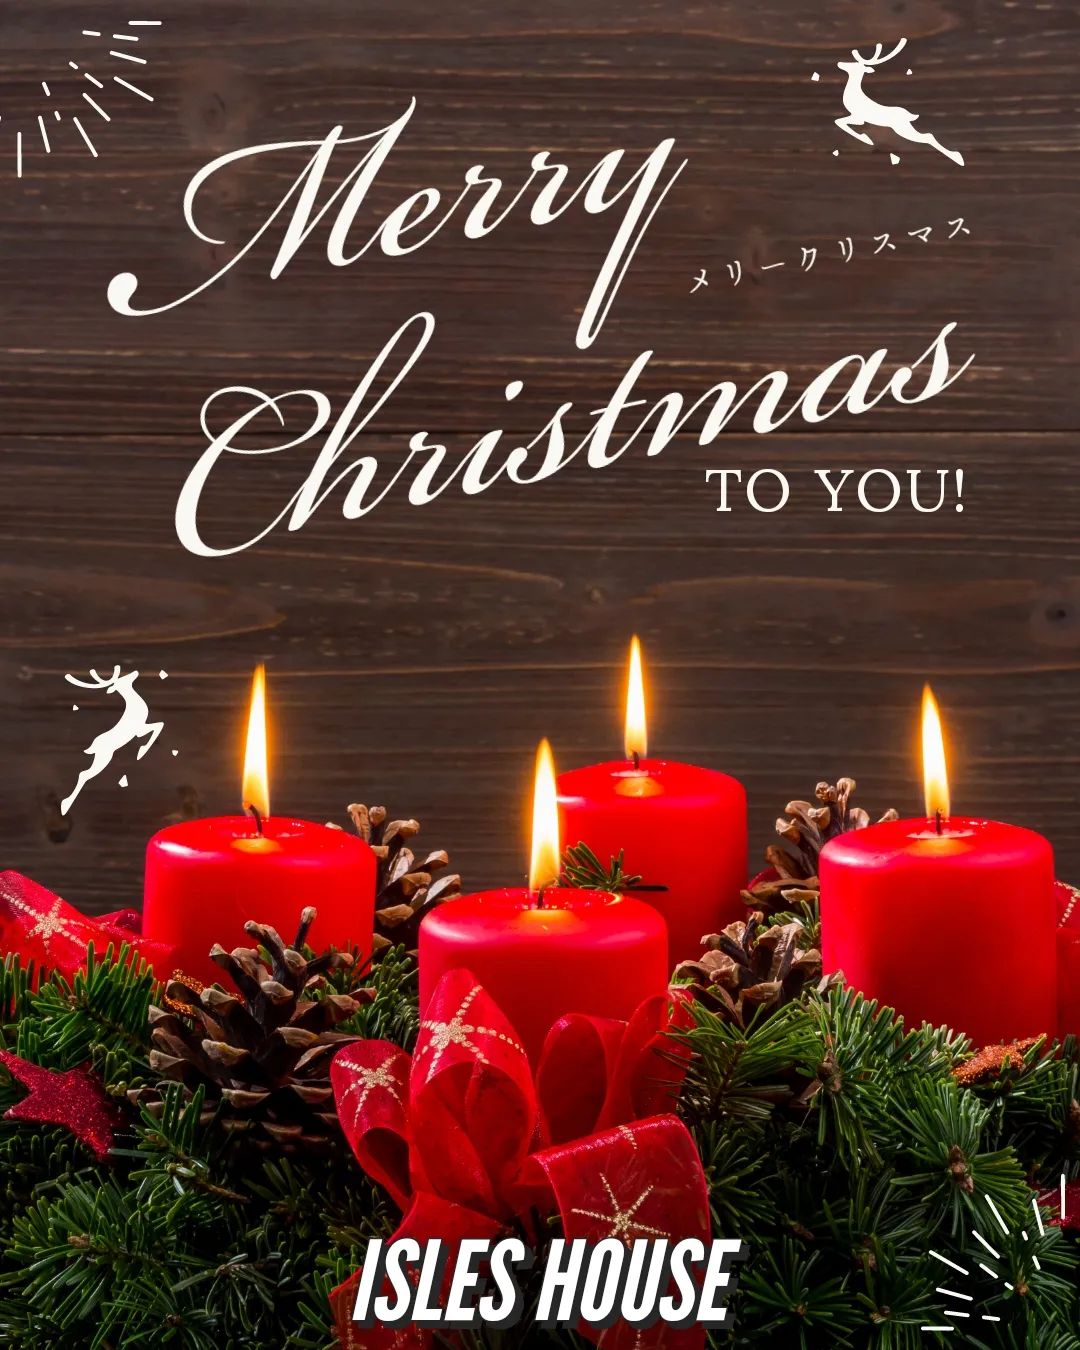 Merry Christmas to you
世界中の人々が幸せでありますように
#merrychristmas
#christmas